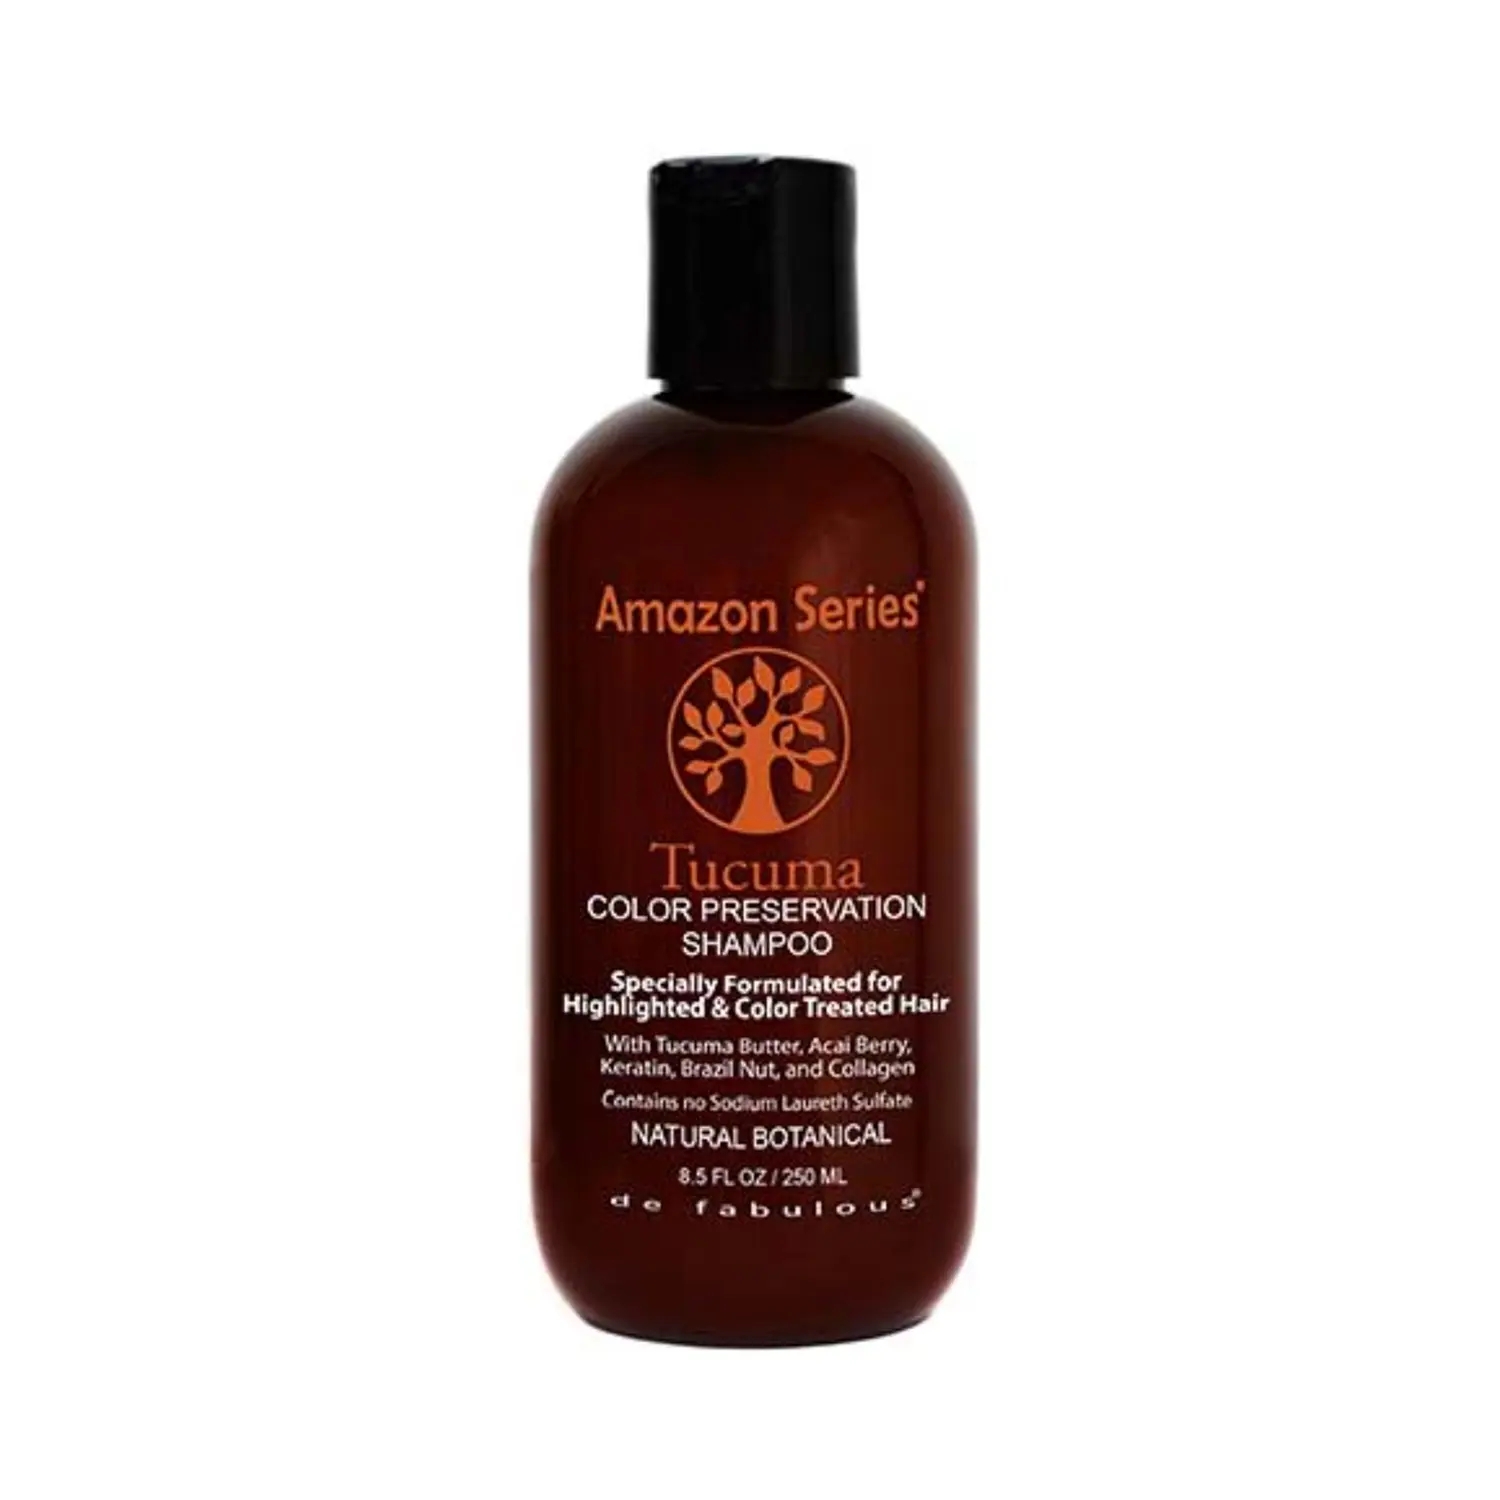 Amazon Series | Amazon Series Tucuma Color Preservation Shampoo (250ml)